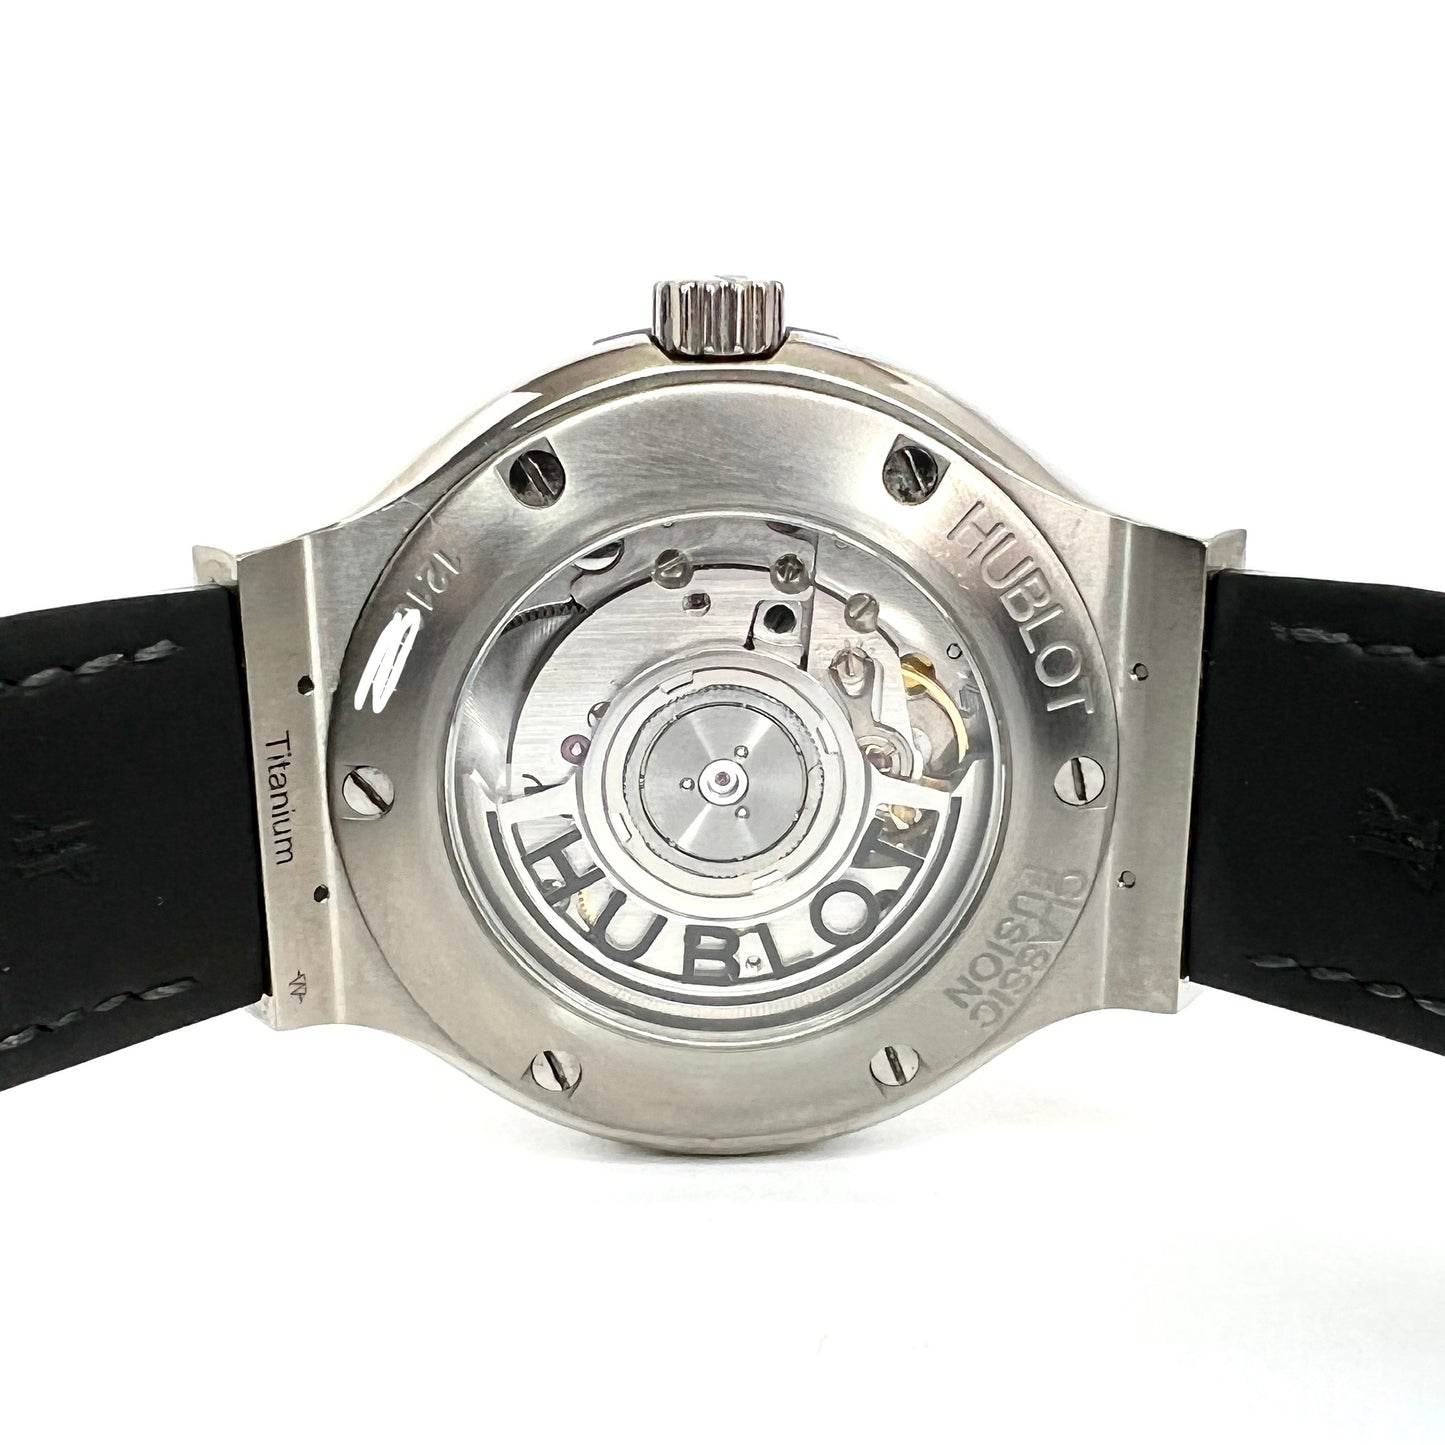 HUBLOT CLASSIC FUSION 38mm Automatic Titanium 1.83TCW Diamond Watch SKELETON Backcase